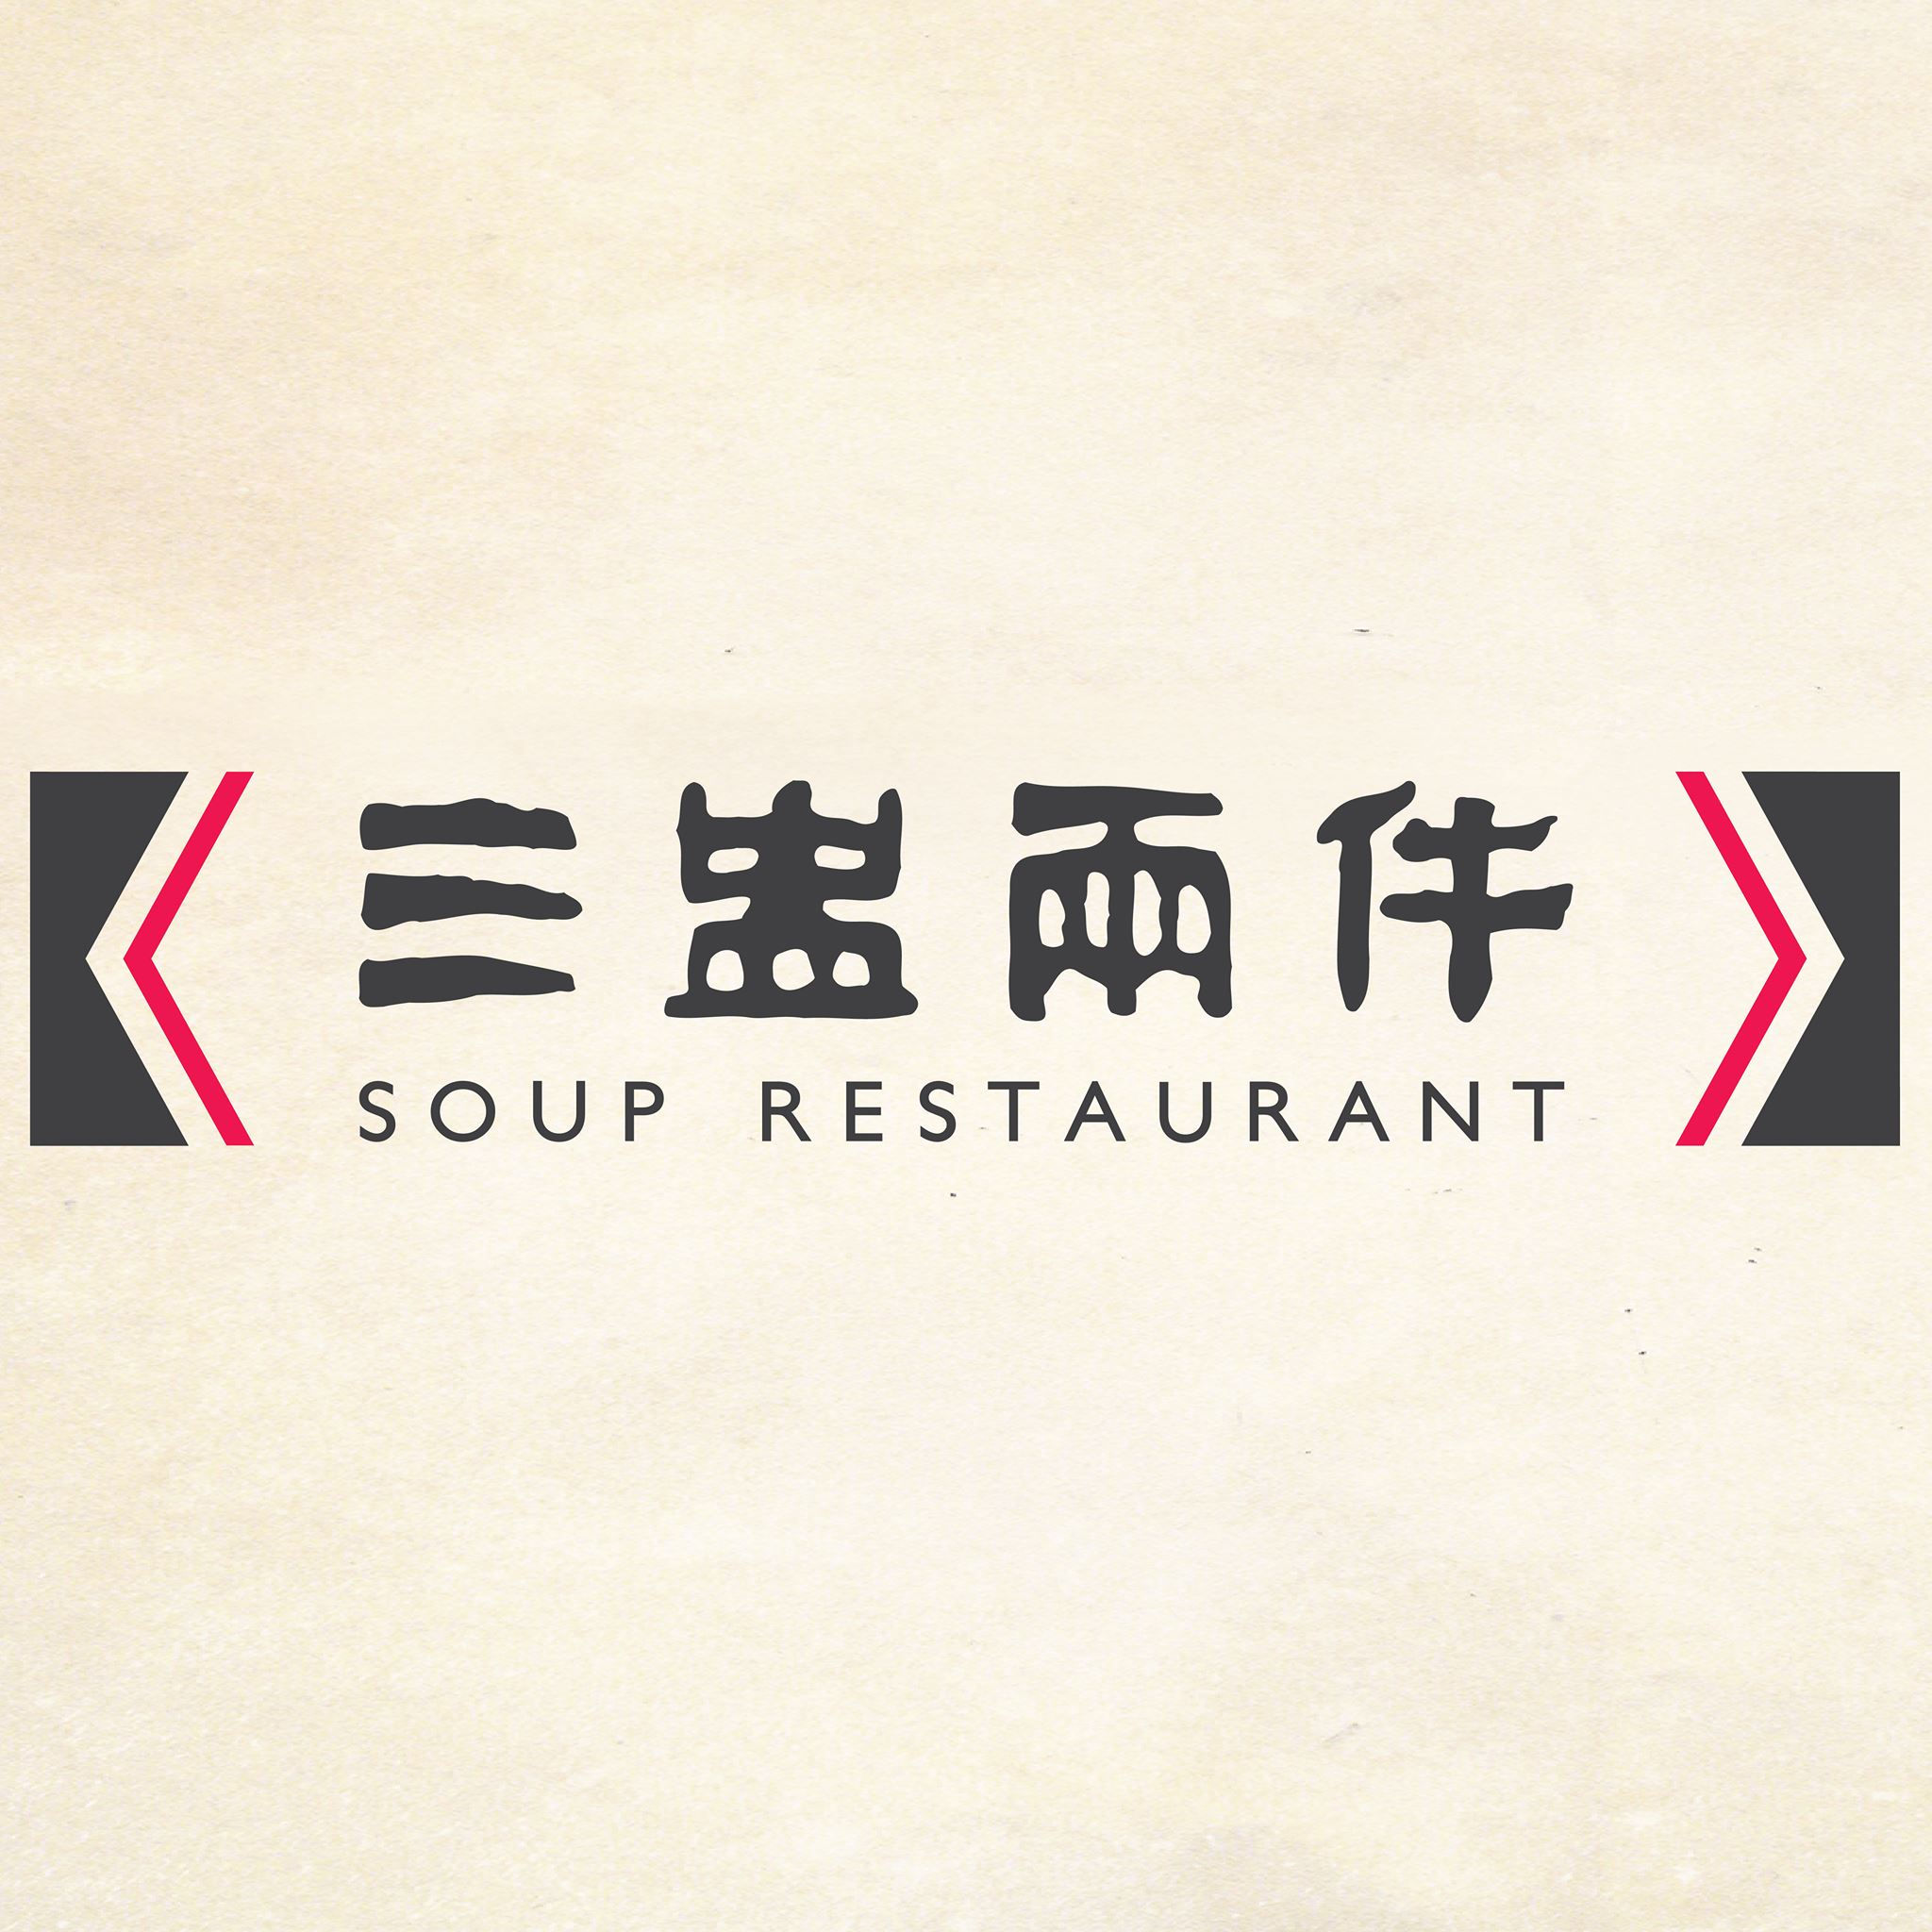 Soup Restaurant - Logo